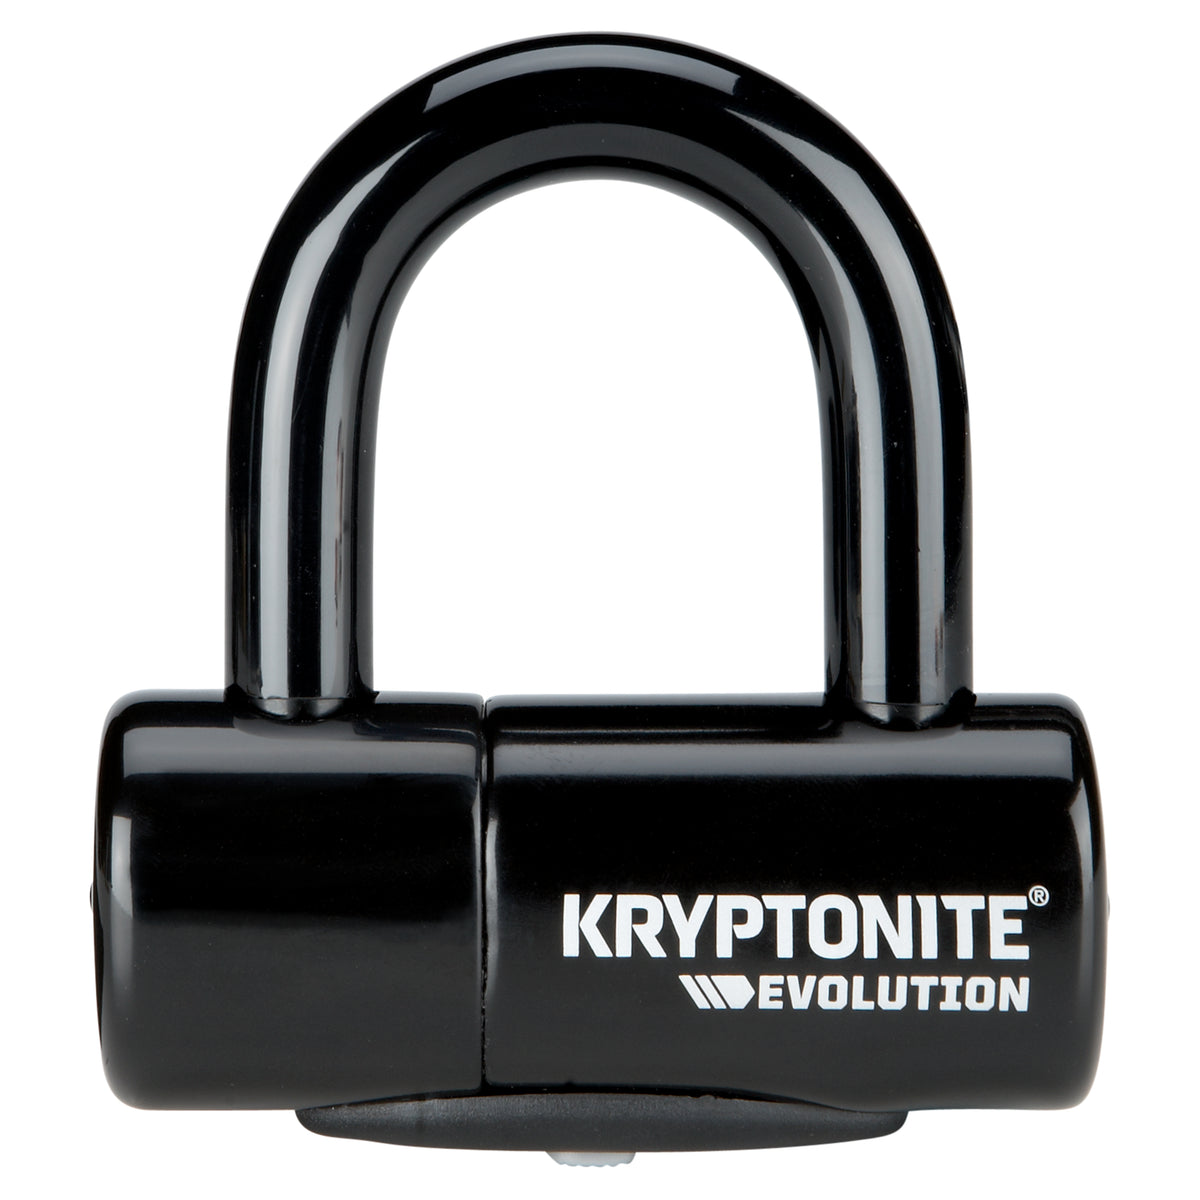 Kryptonite 999607 Evolution Series 4 Disc Lock Black Key with LED Light